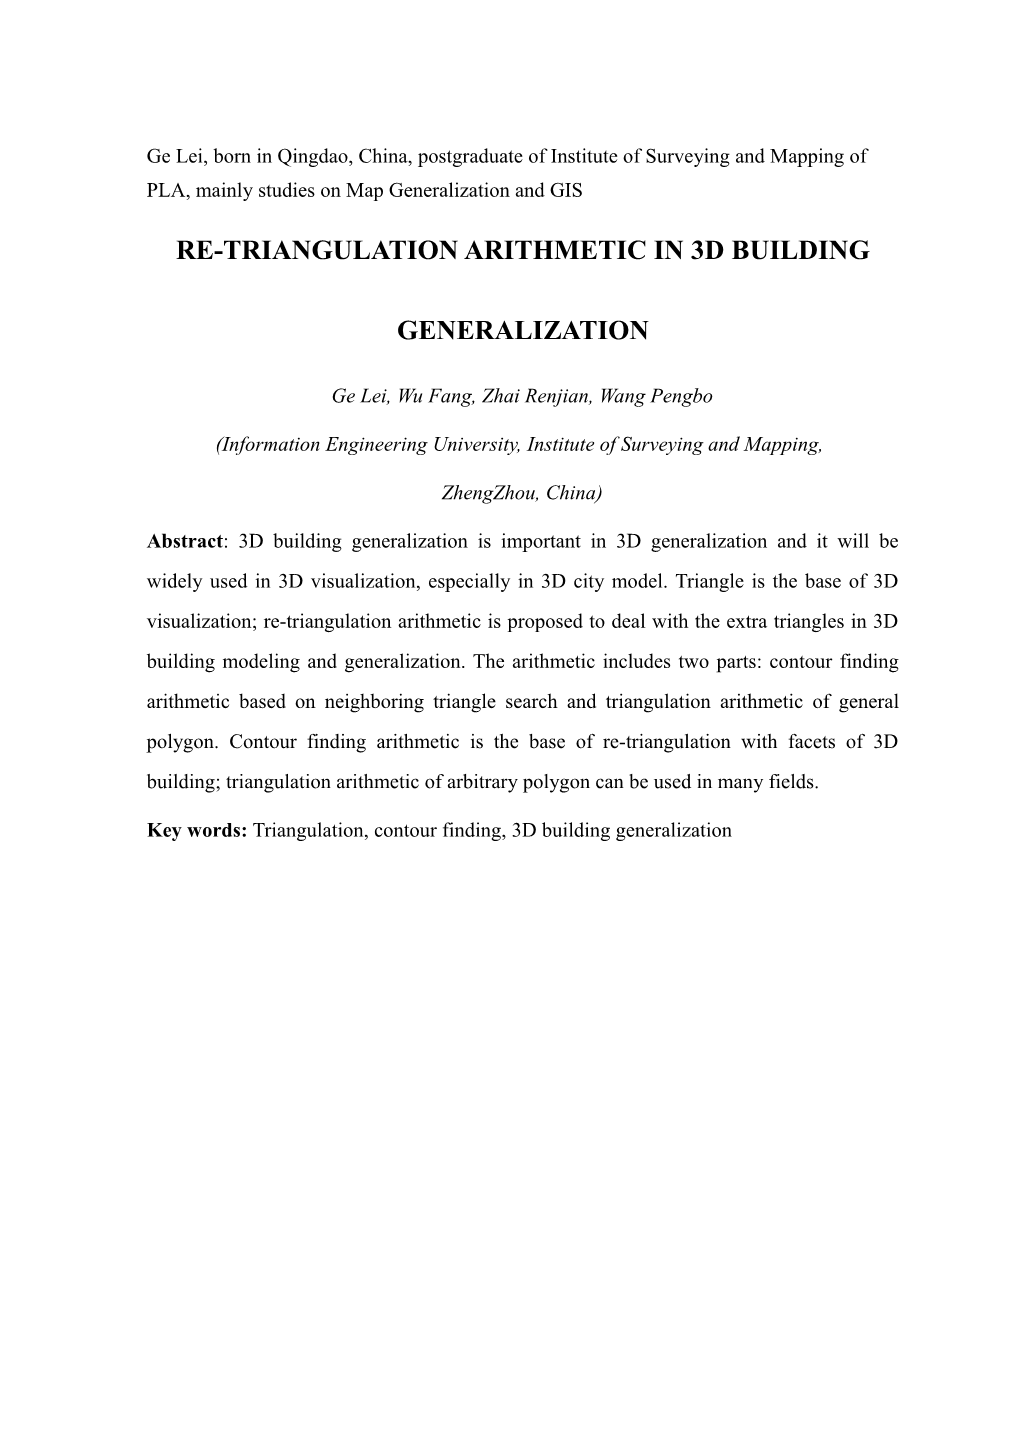 Re-Triangulation Arithmetic in 3D Building Generalization